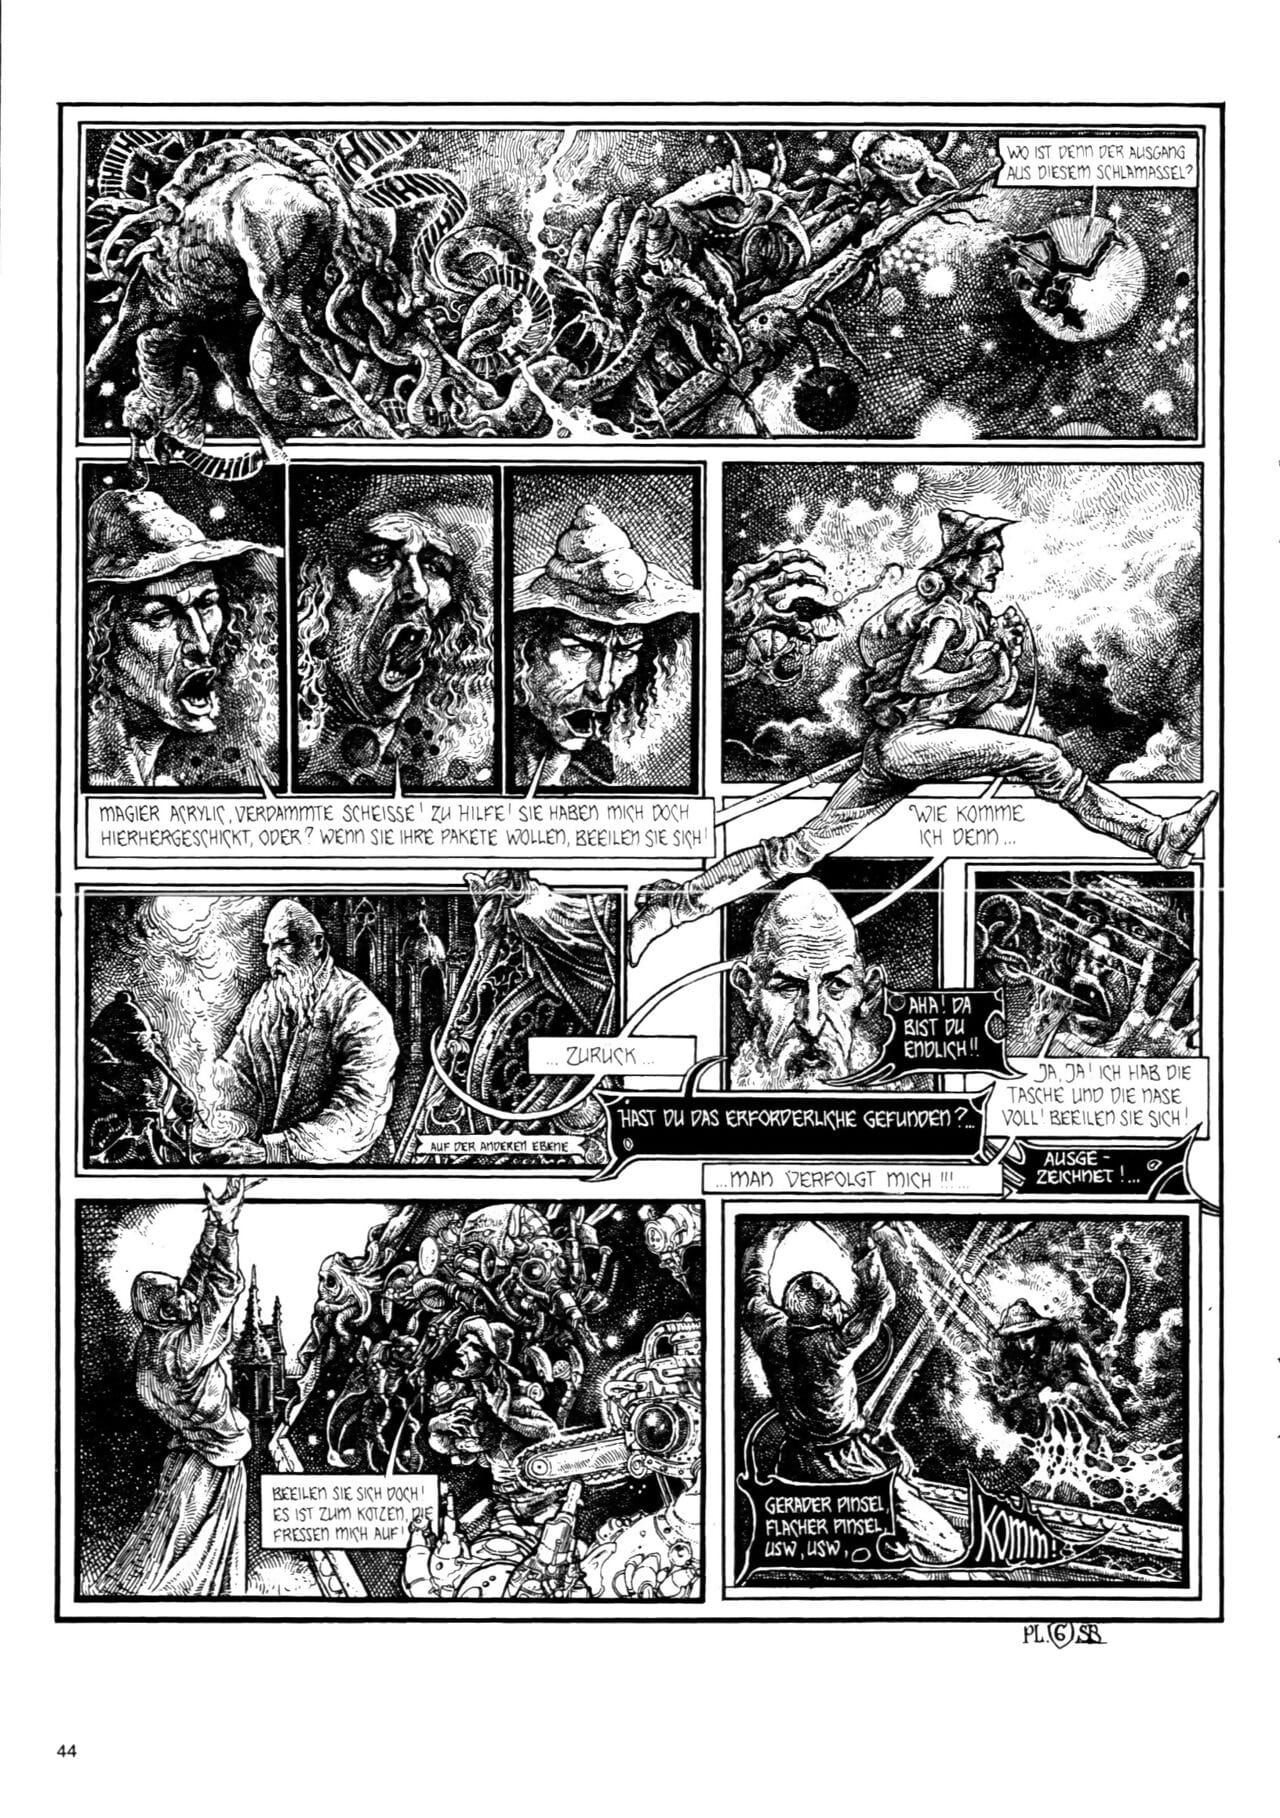 Schwermetall #054 parte 3 page 1